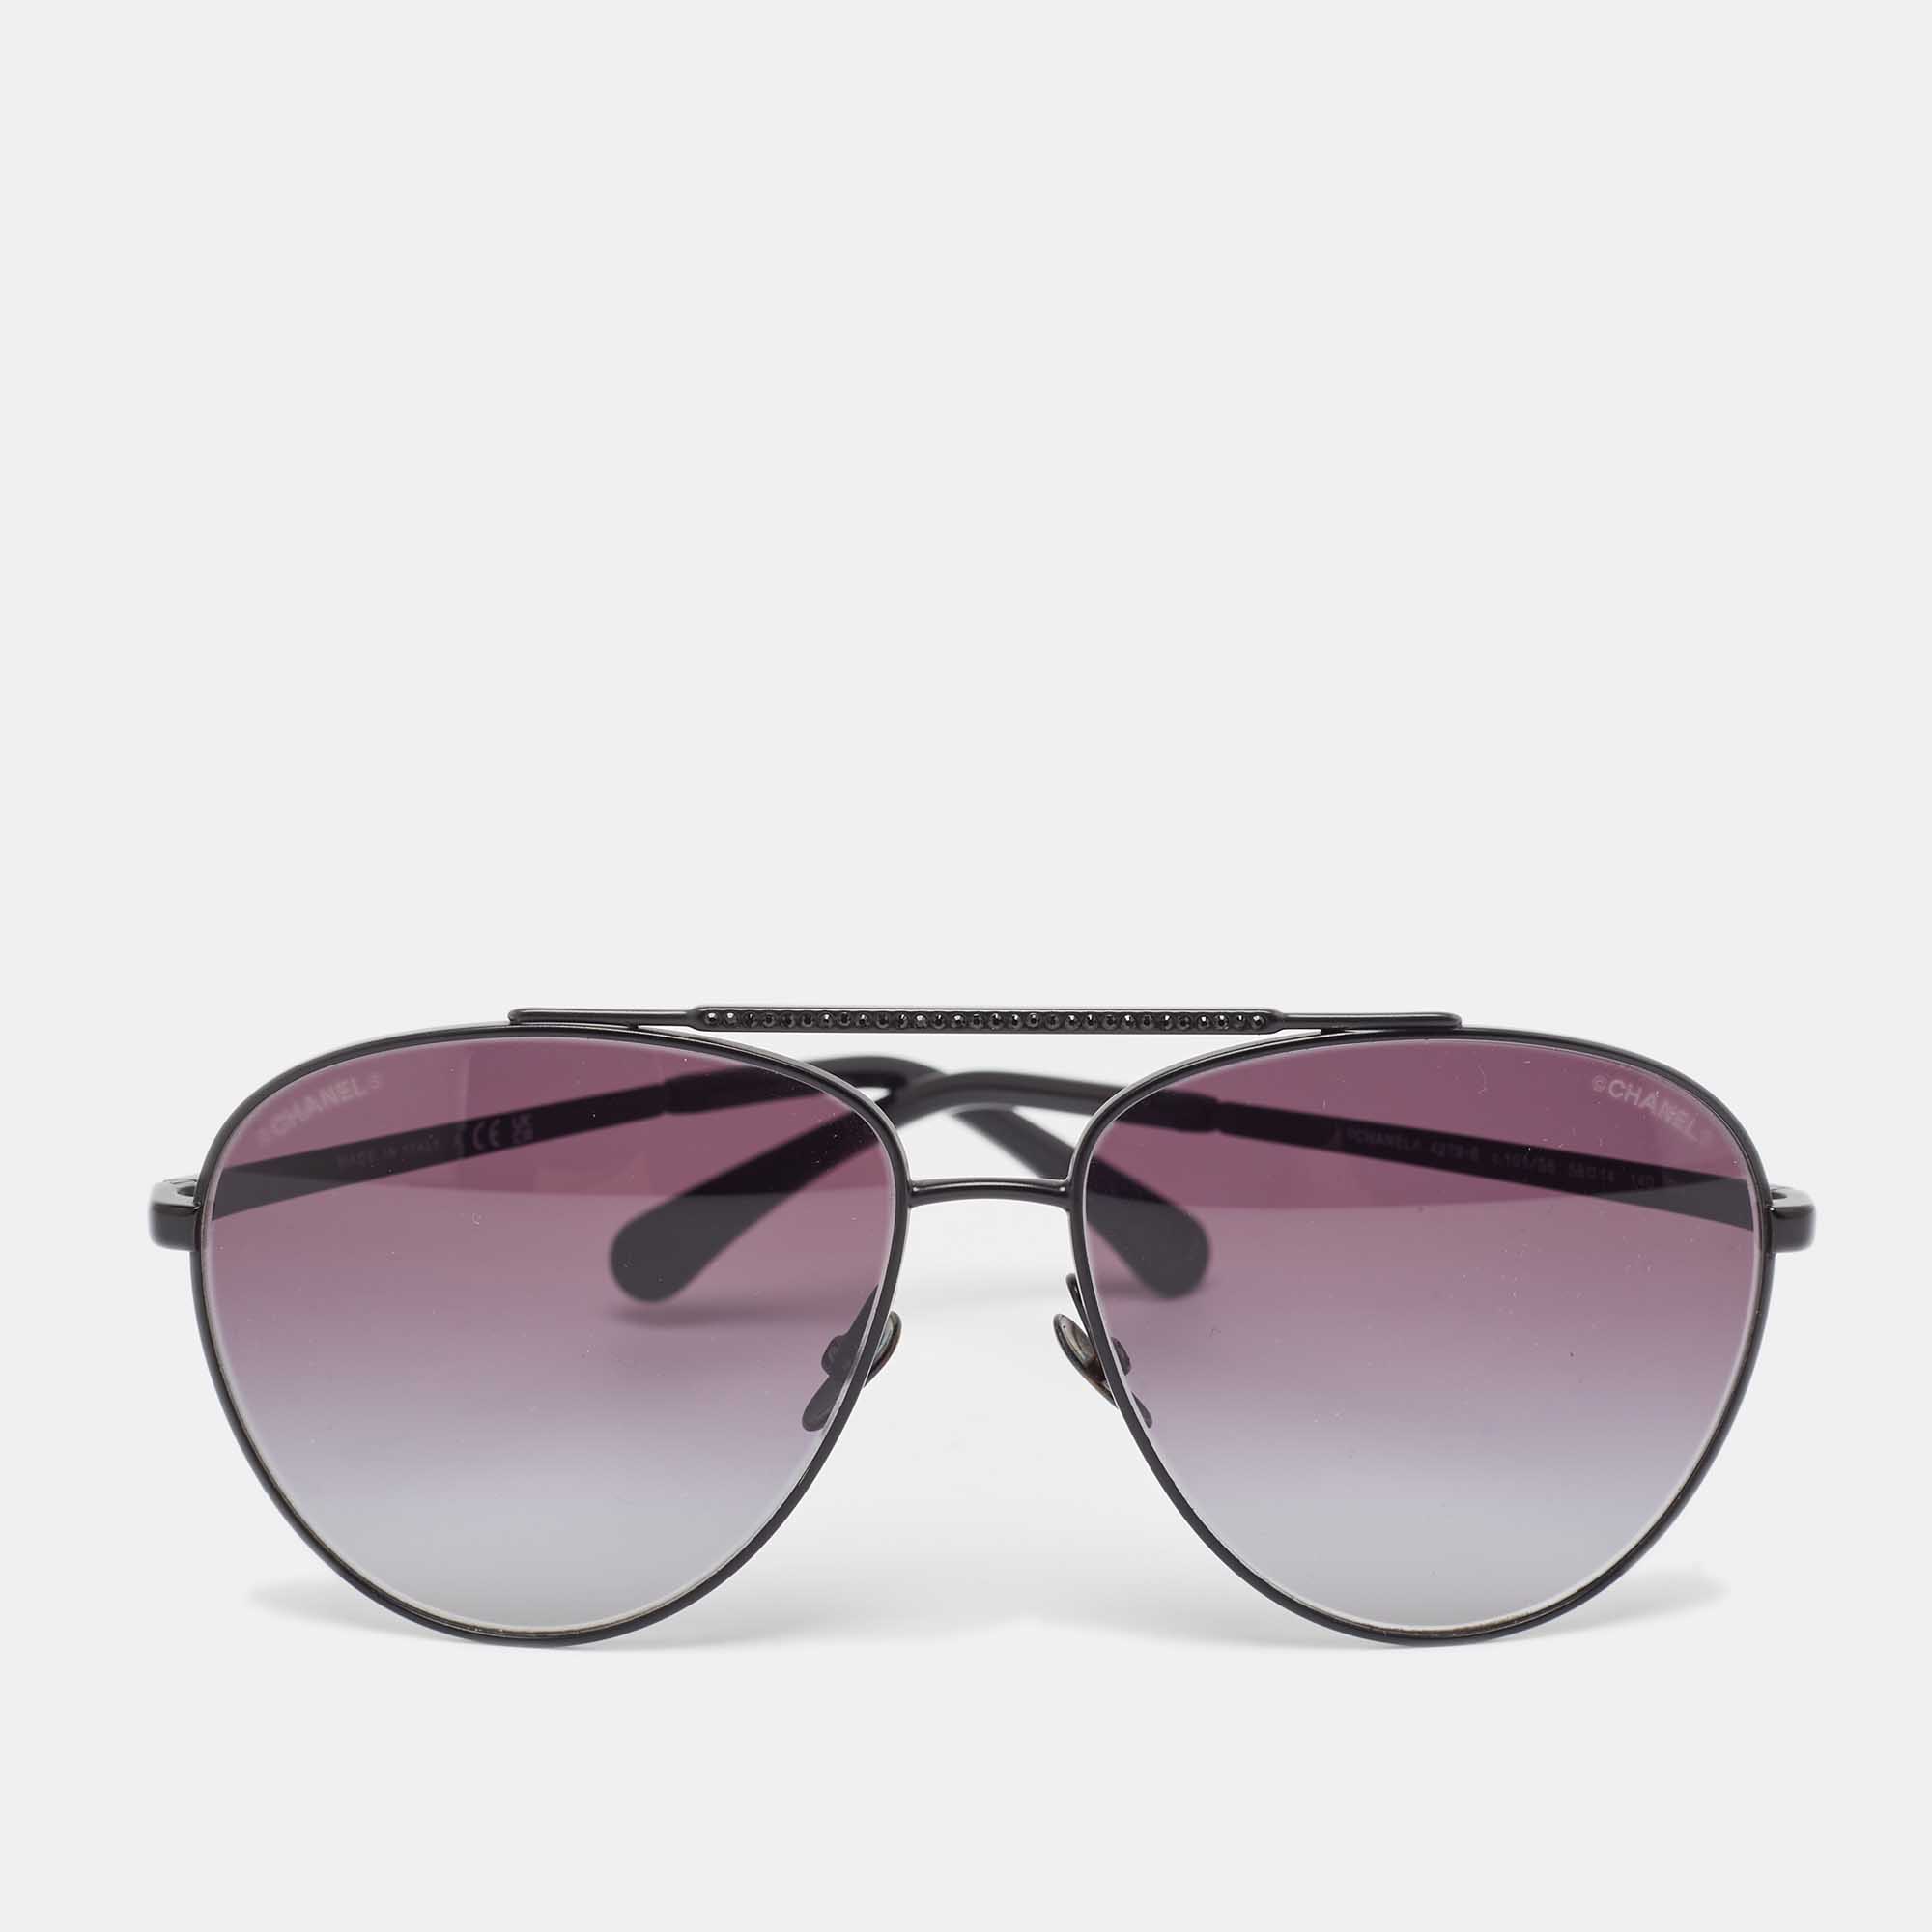 Chanel black gradient 4279-b aviators sunglasses